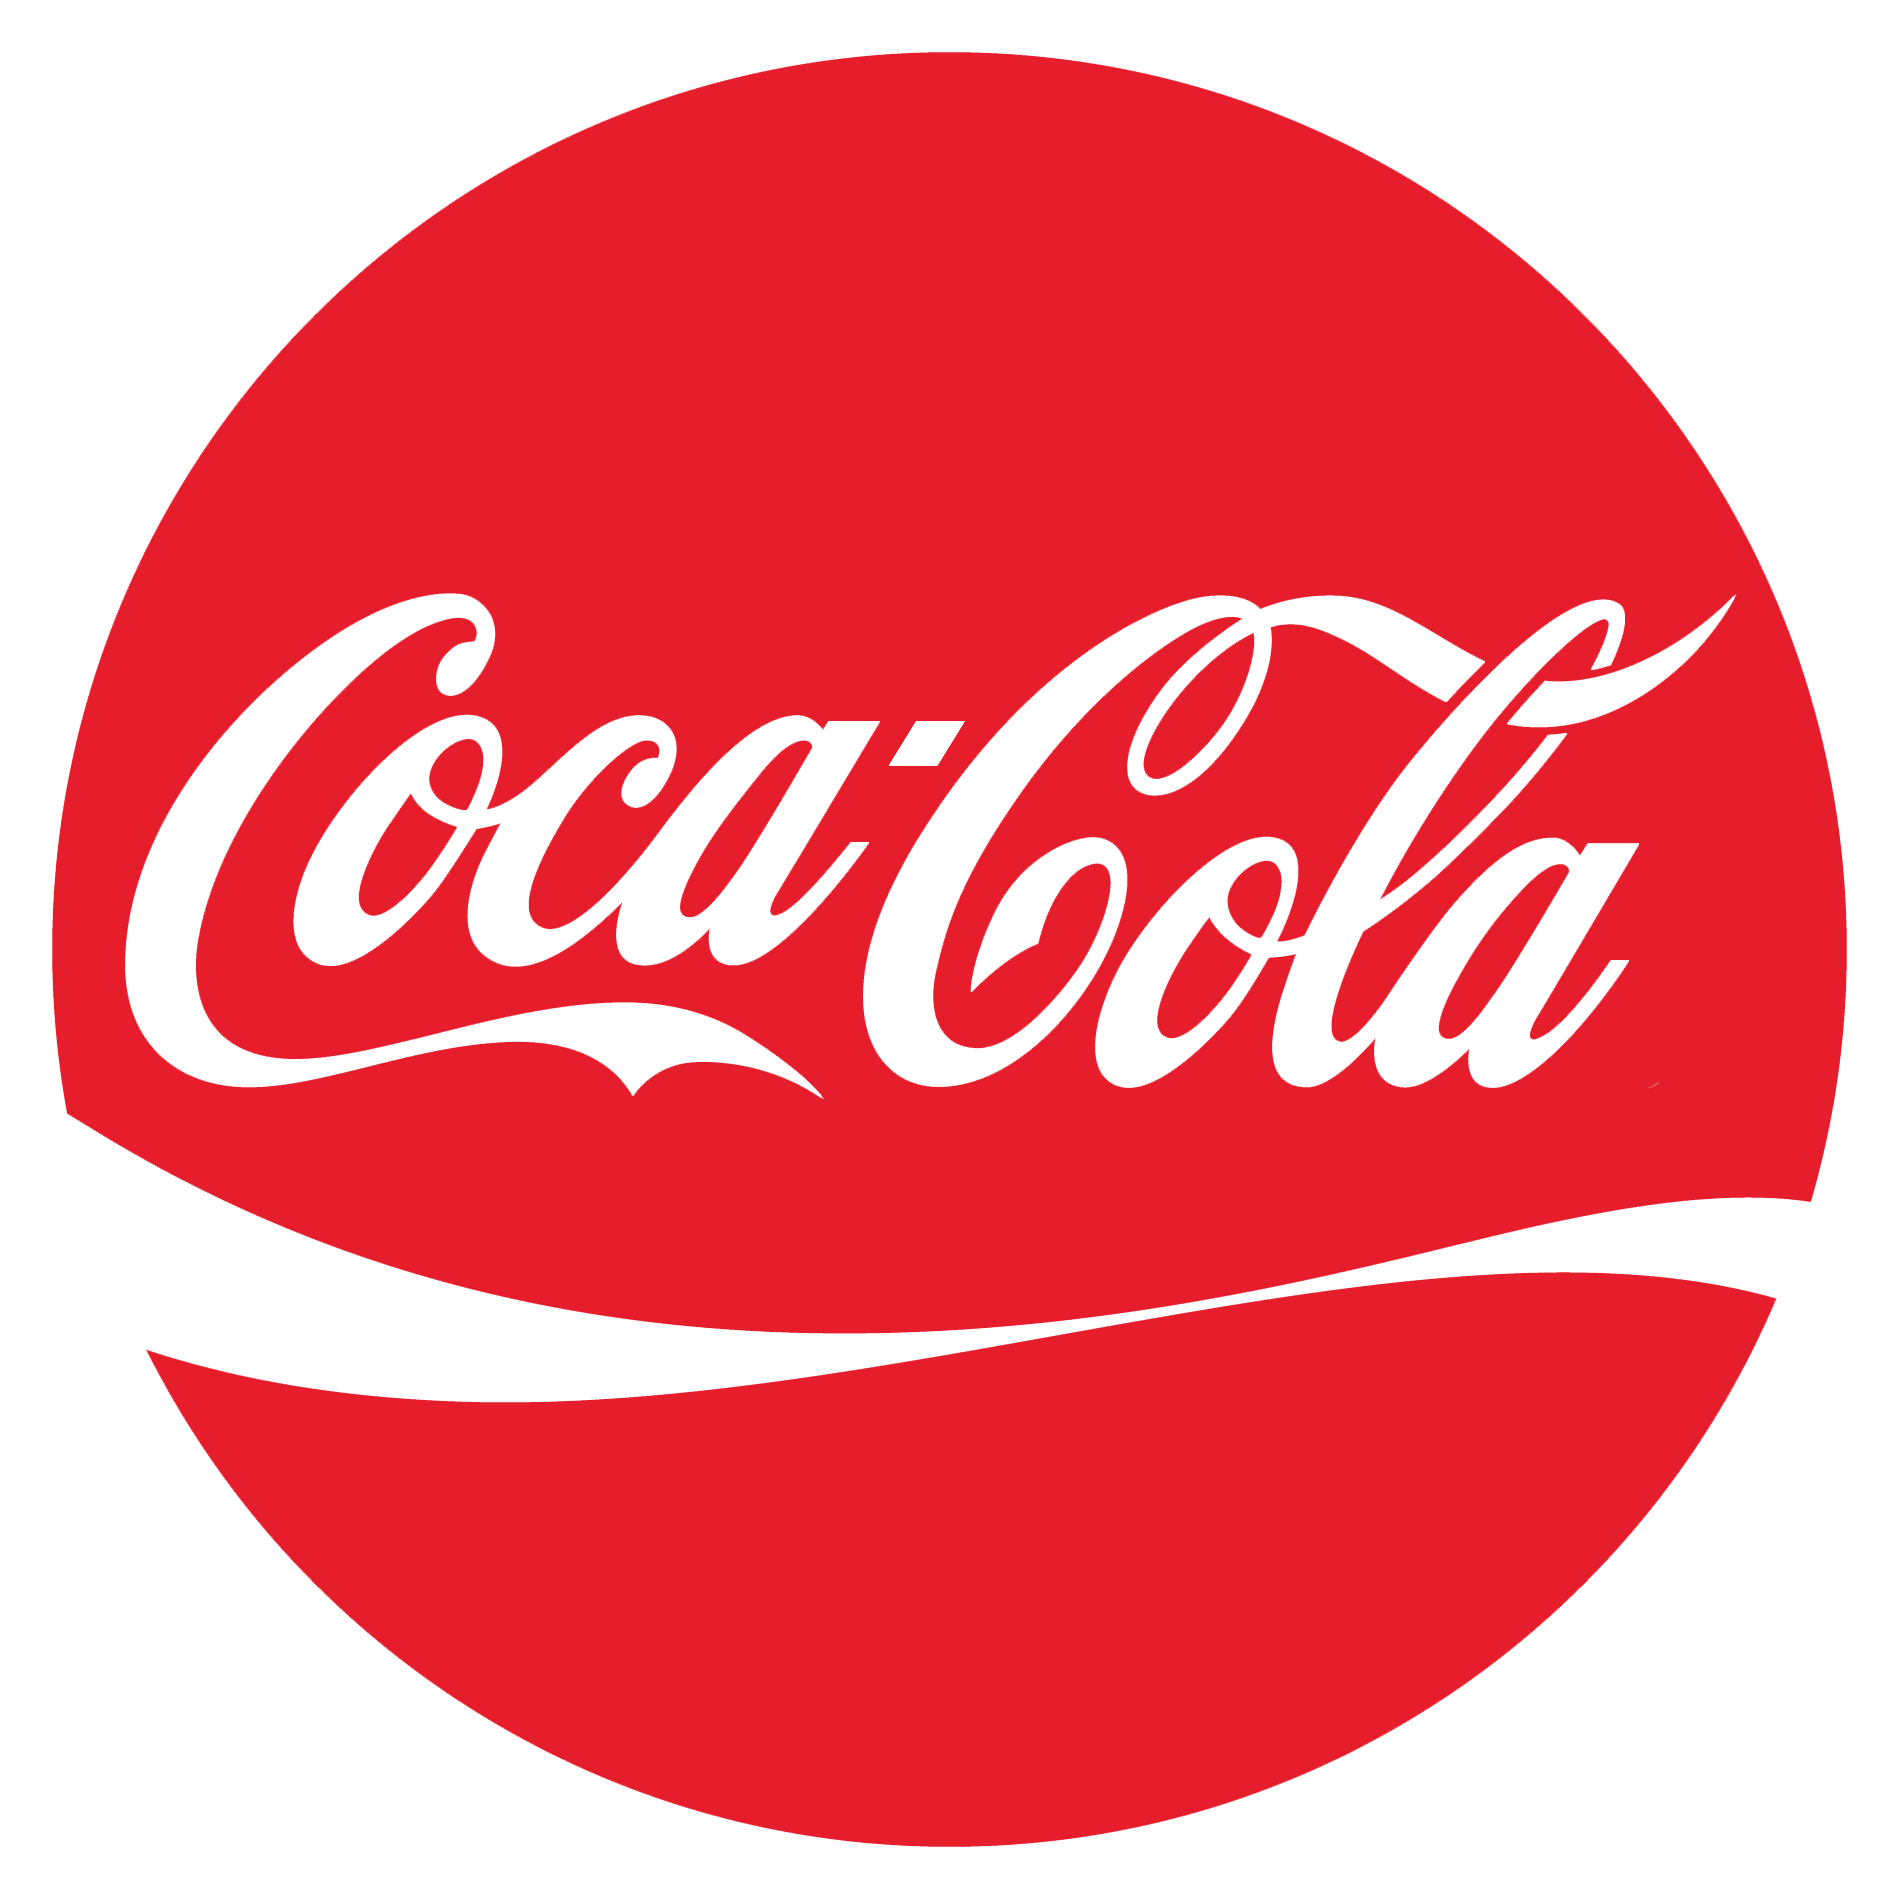 Coke Logo - Coca Cola Logo, Coca Cola Symbol Meaning, History And Evolution